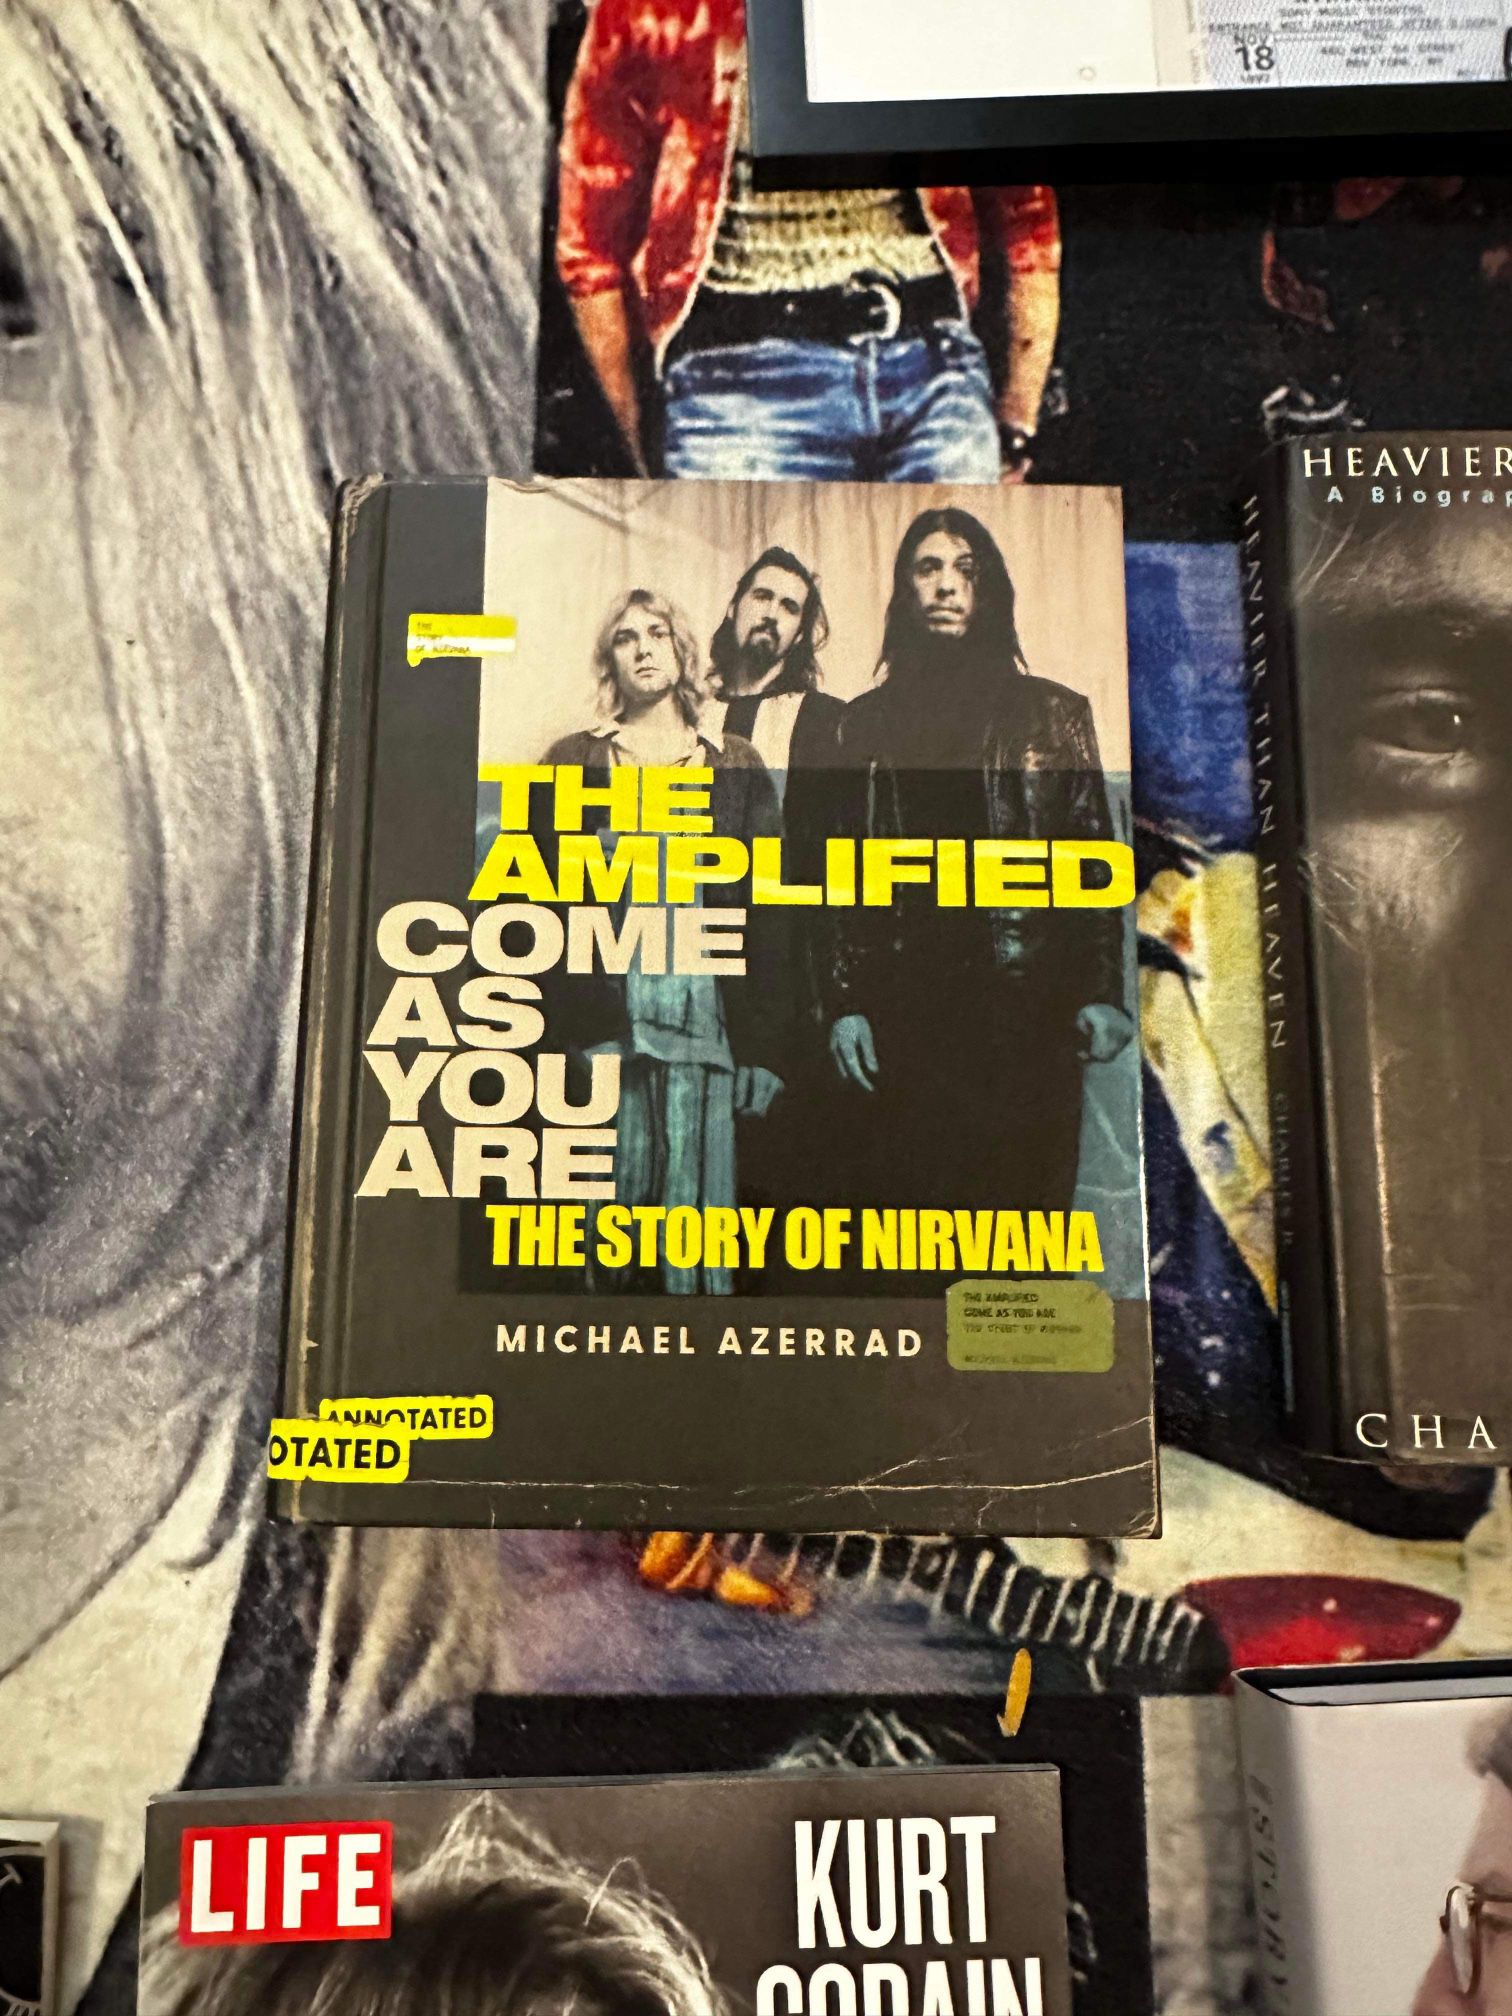 Nirvana/kirt Cobain Lot